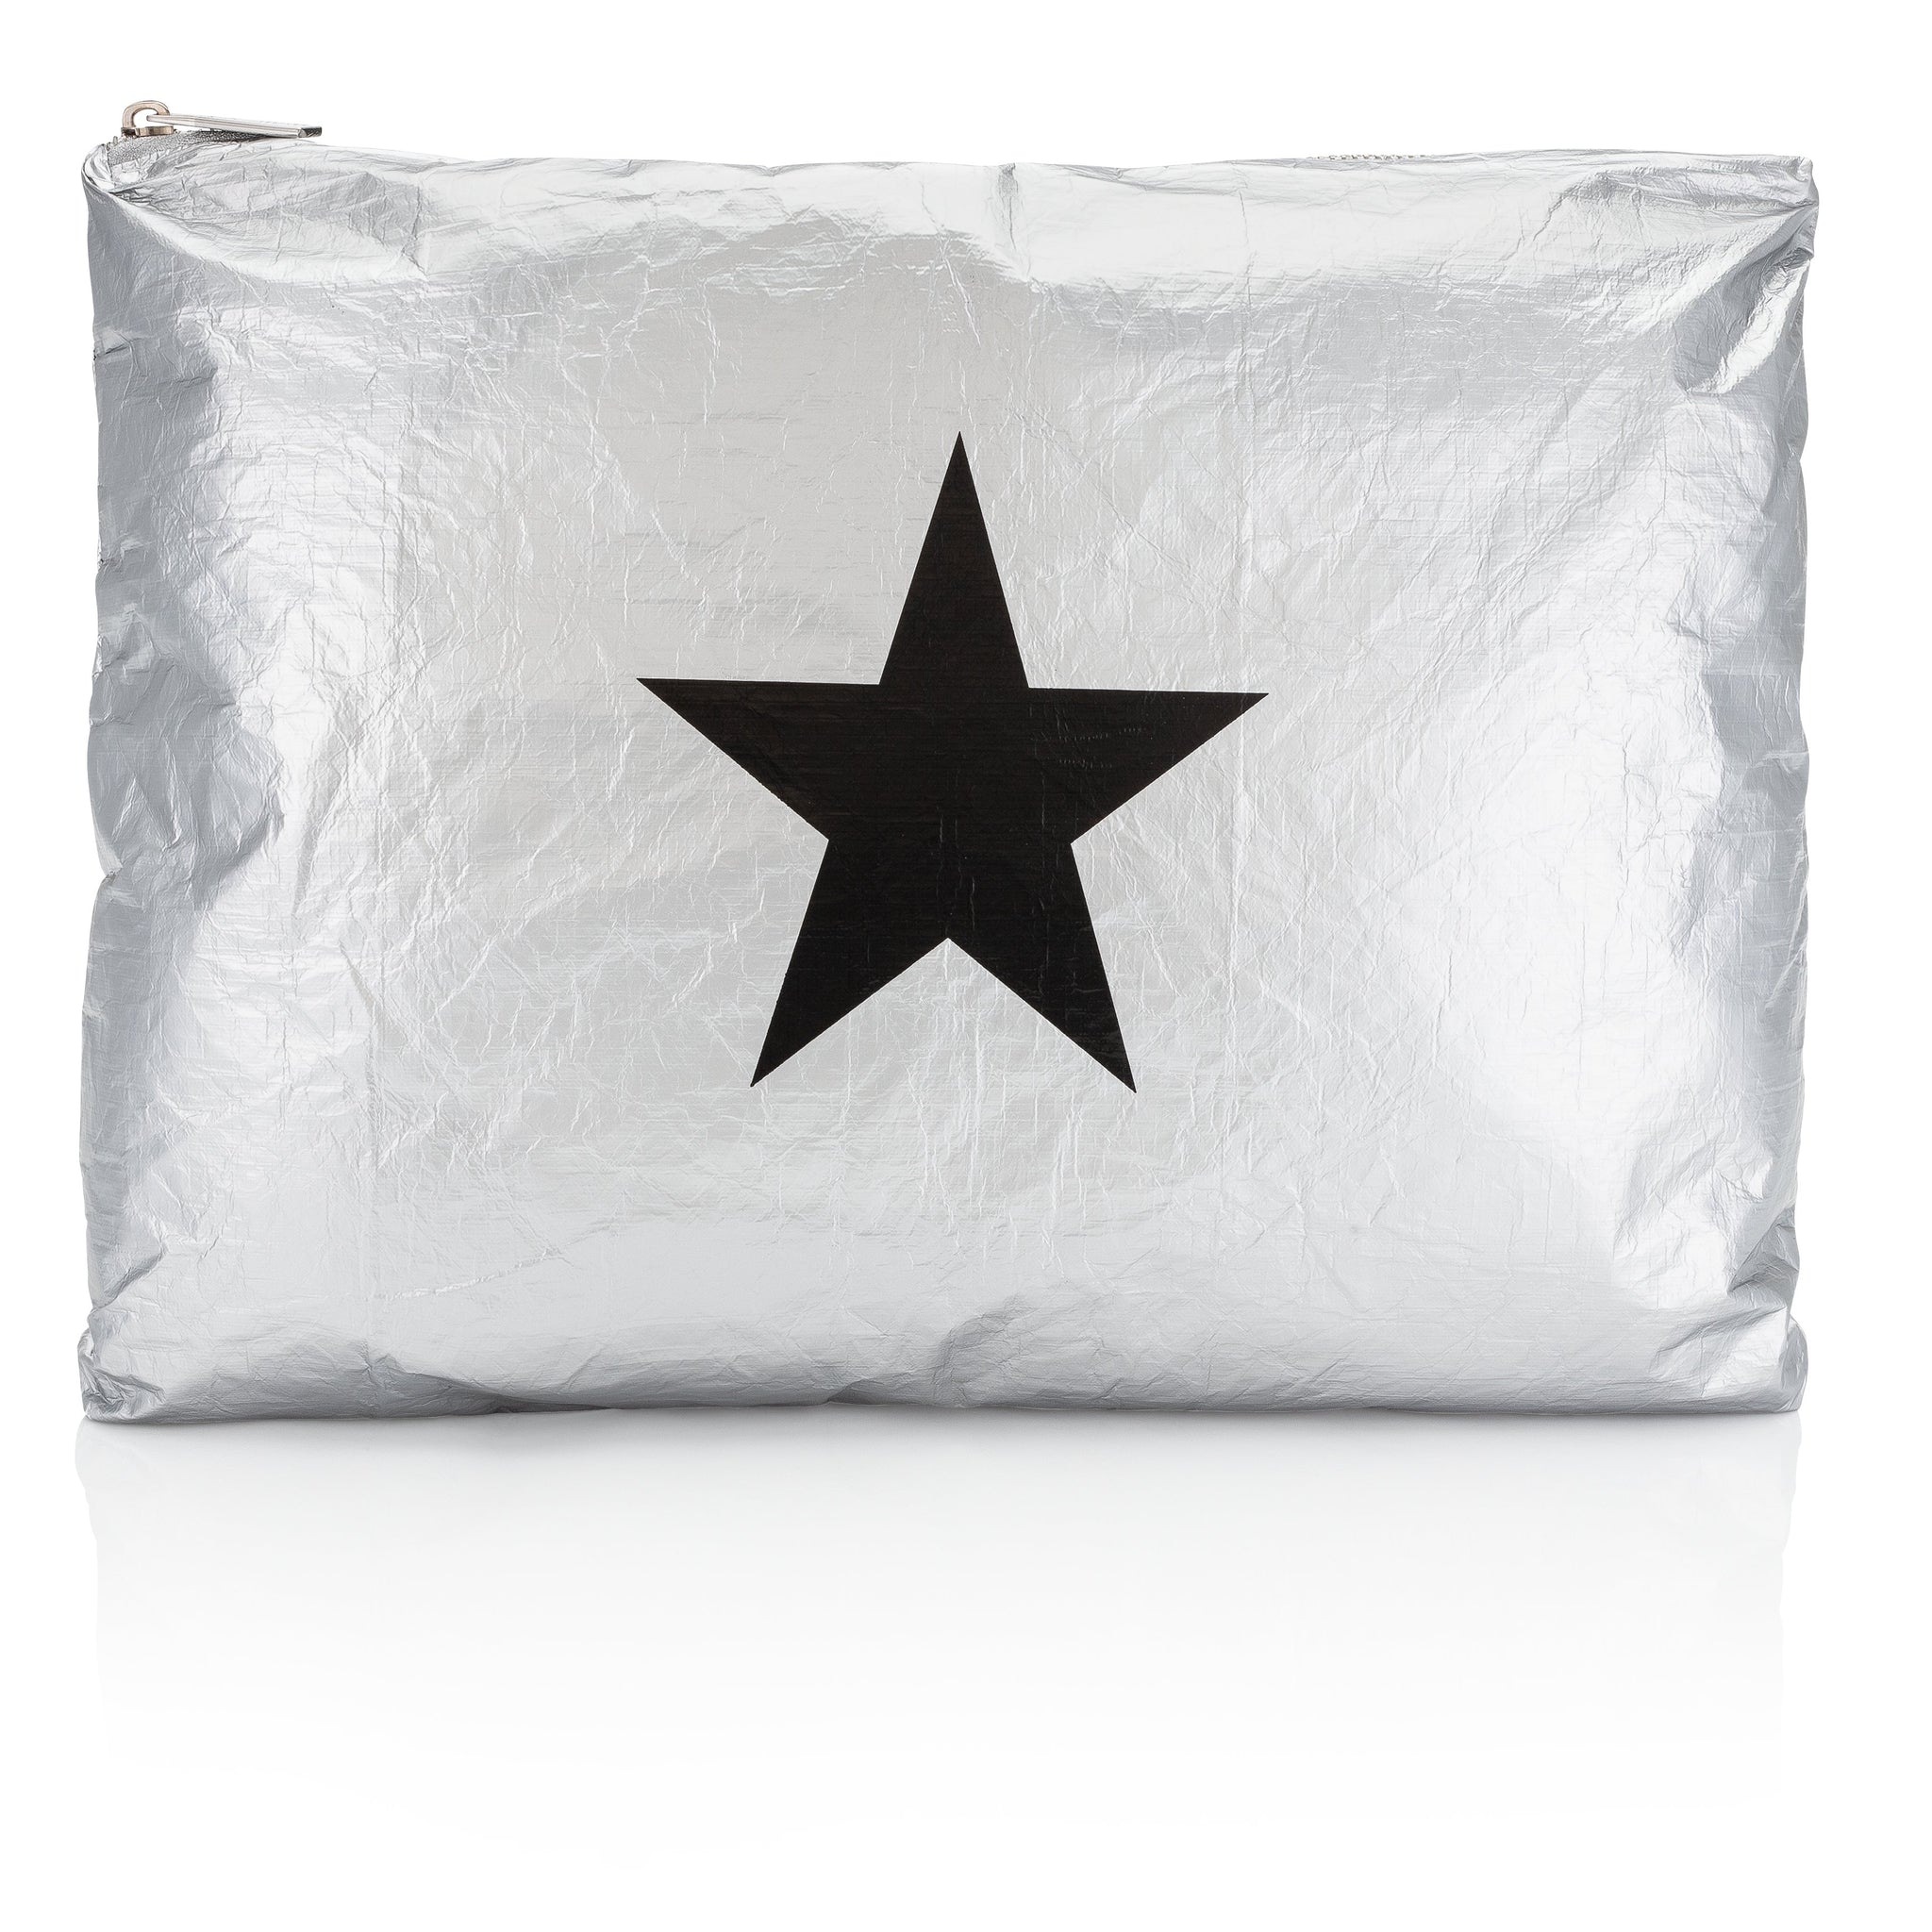 Hi Love Cute Jumbo Travel Bag - Metallic Silver with Black Star - Cool Gym Bag